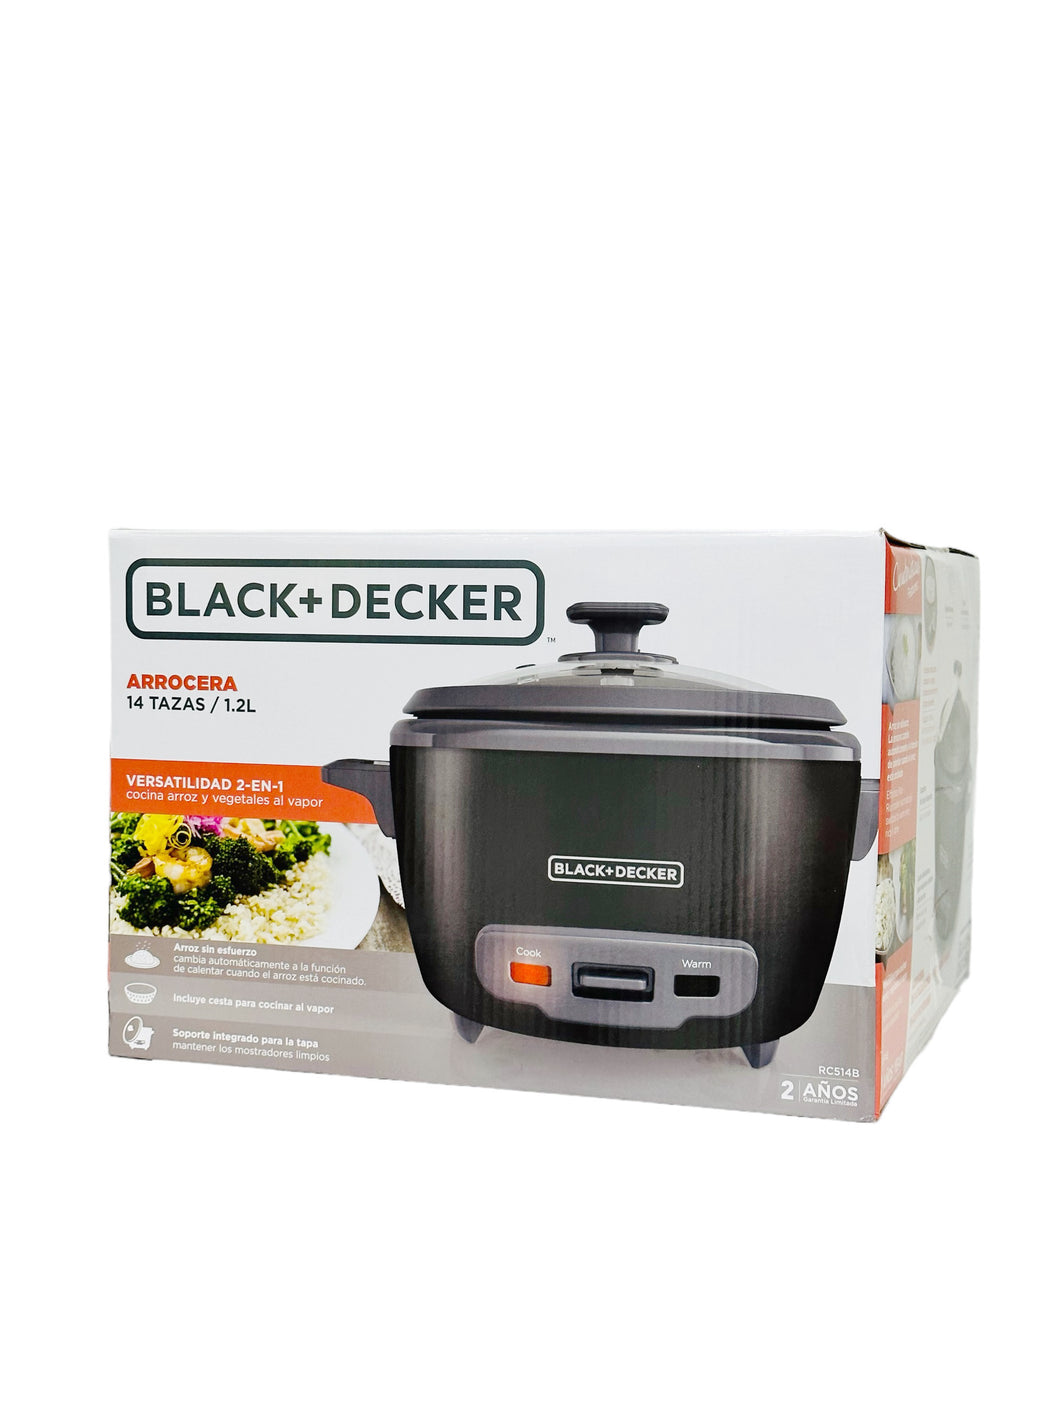 Black+Decker Rice Cooker 110V 1.2L电饭煲